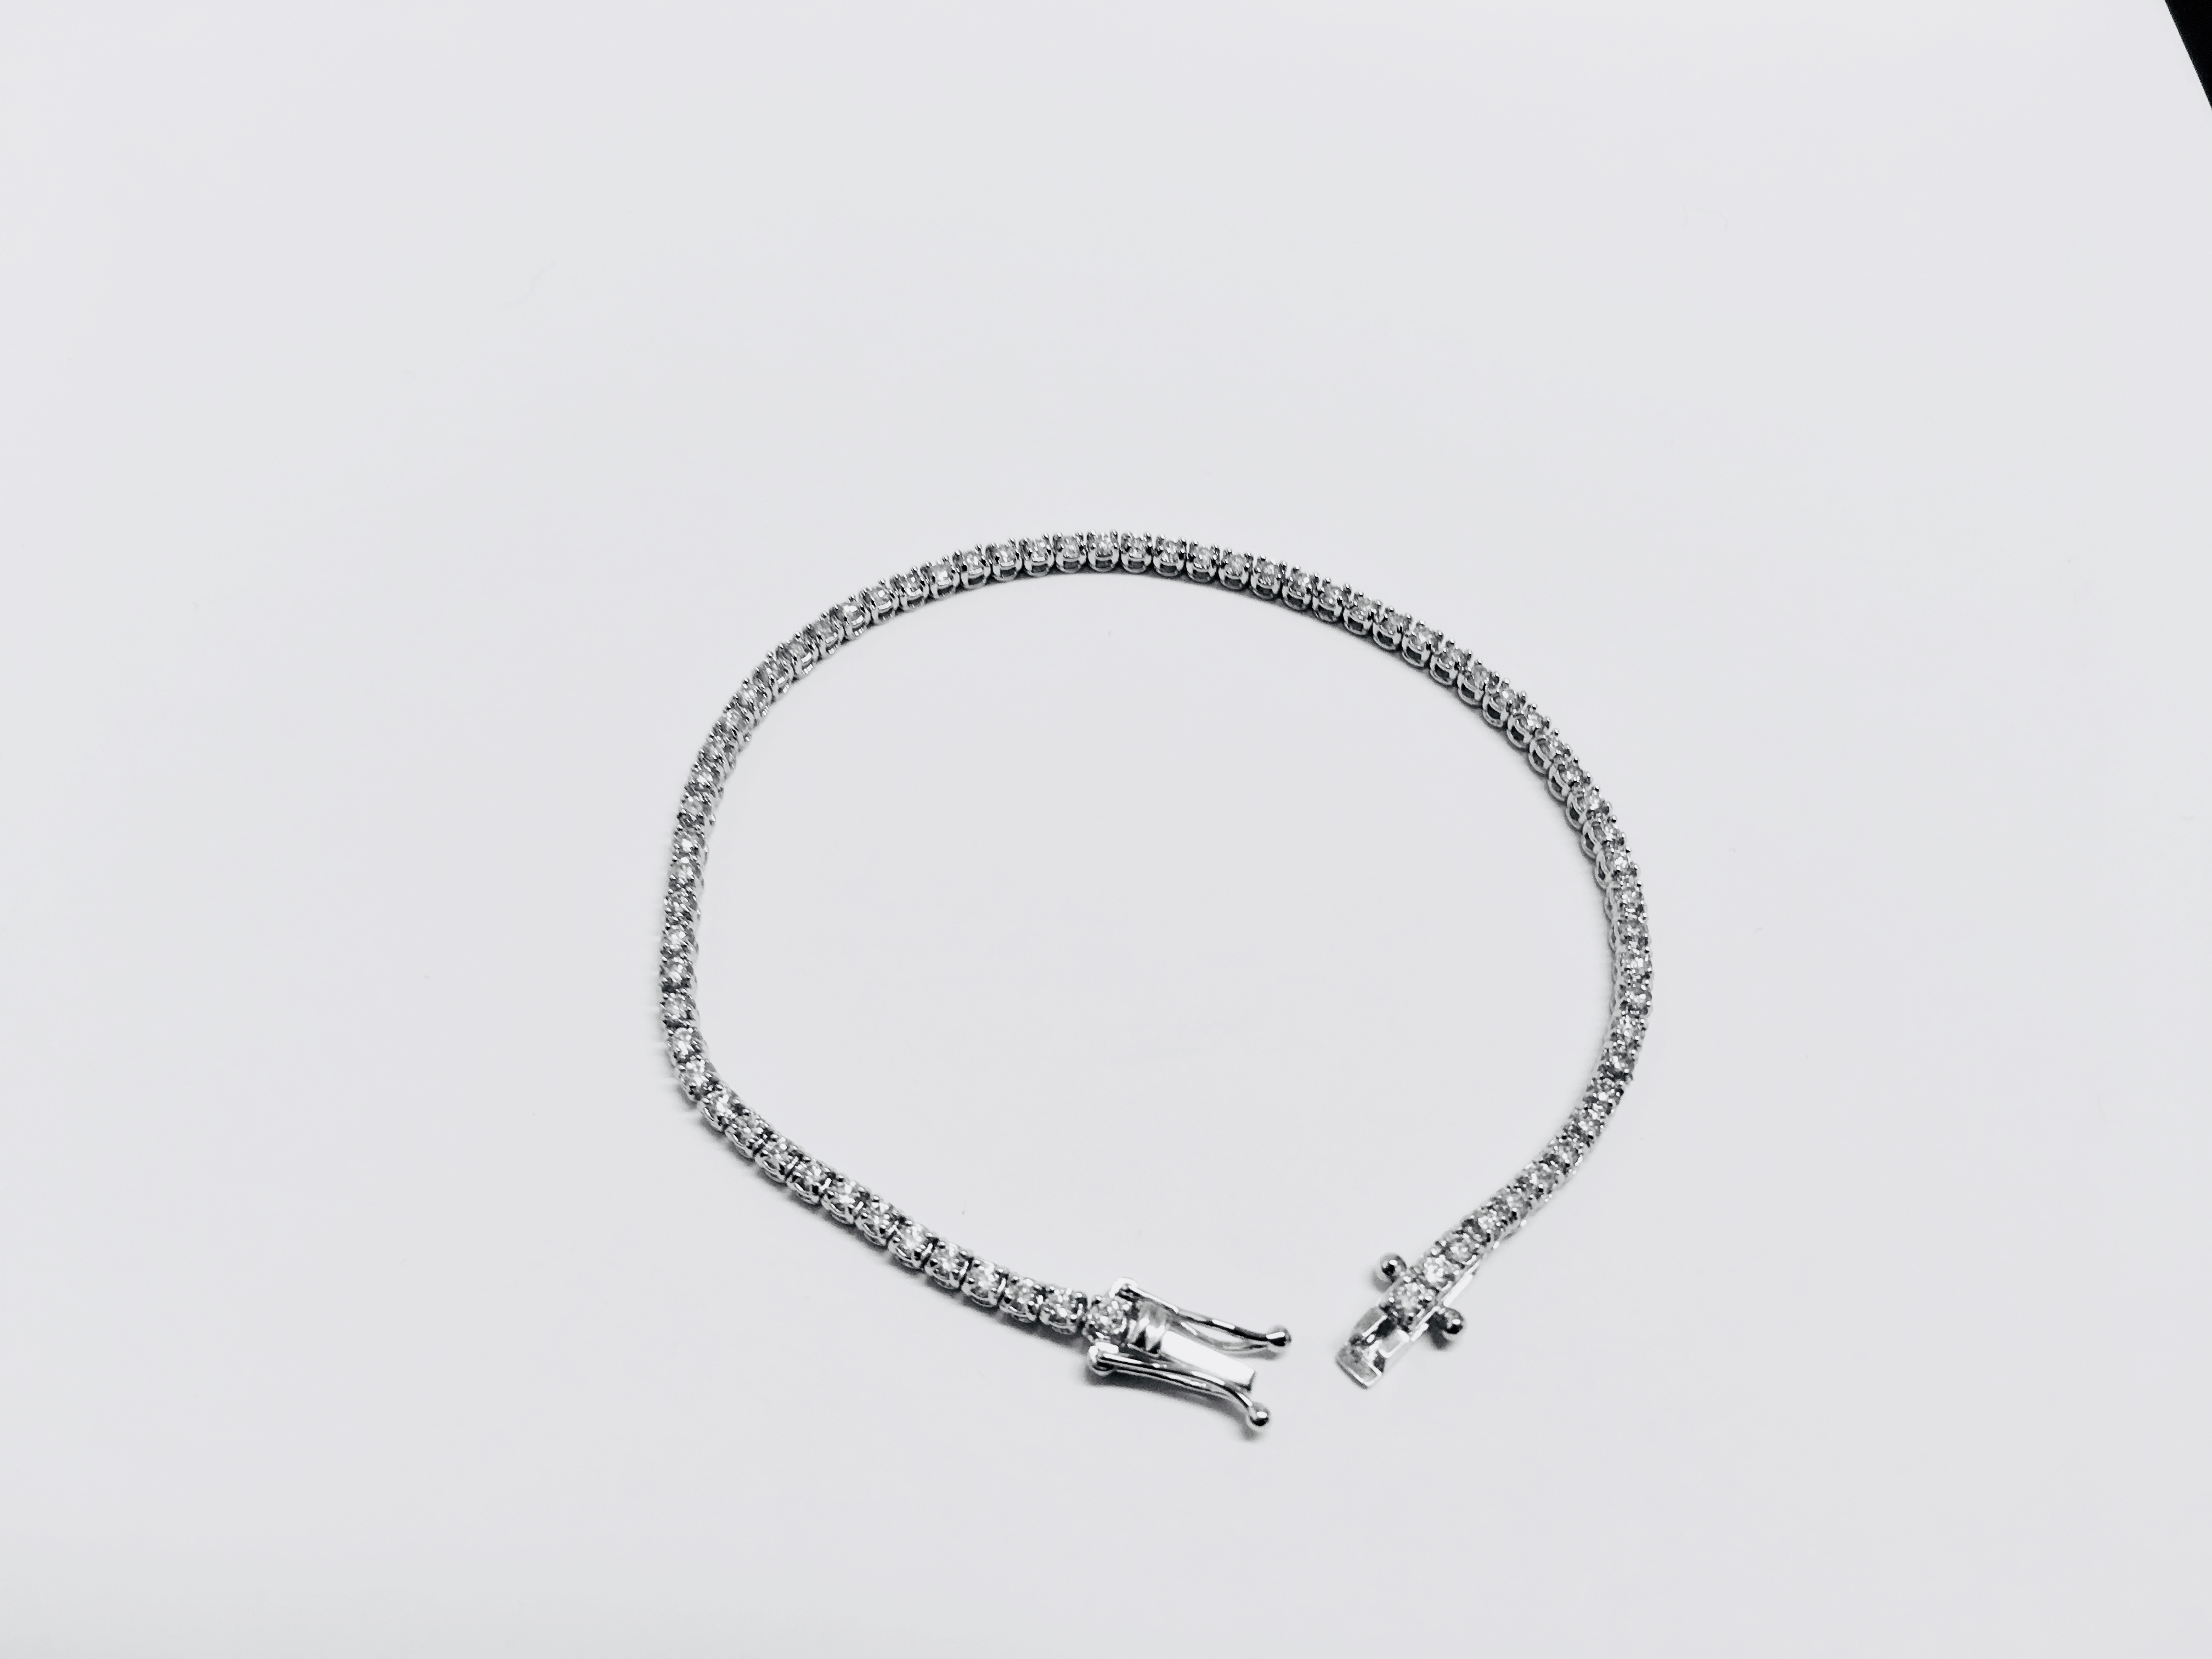 2.10ct diamond tennis bracelet with 70 brilliant cut diamonds - Image 20 of 28